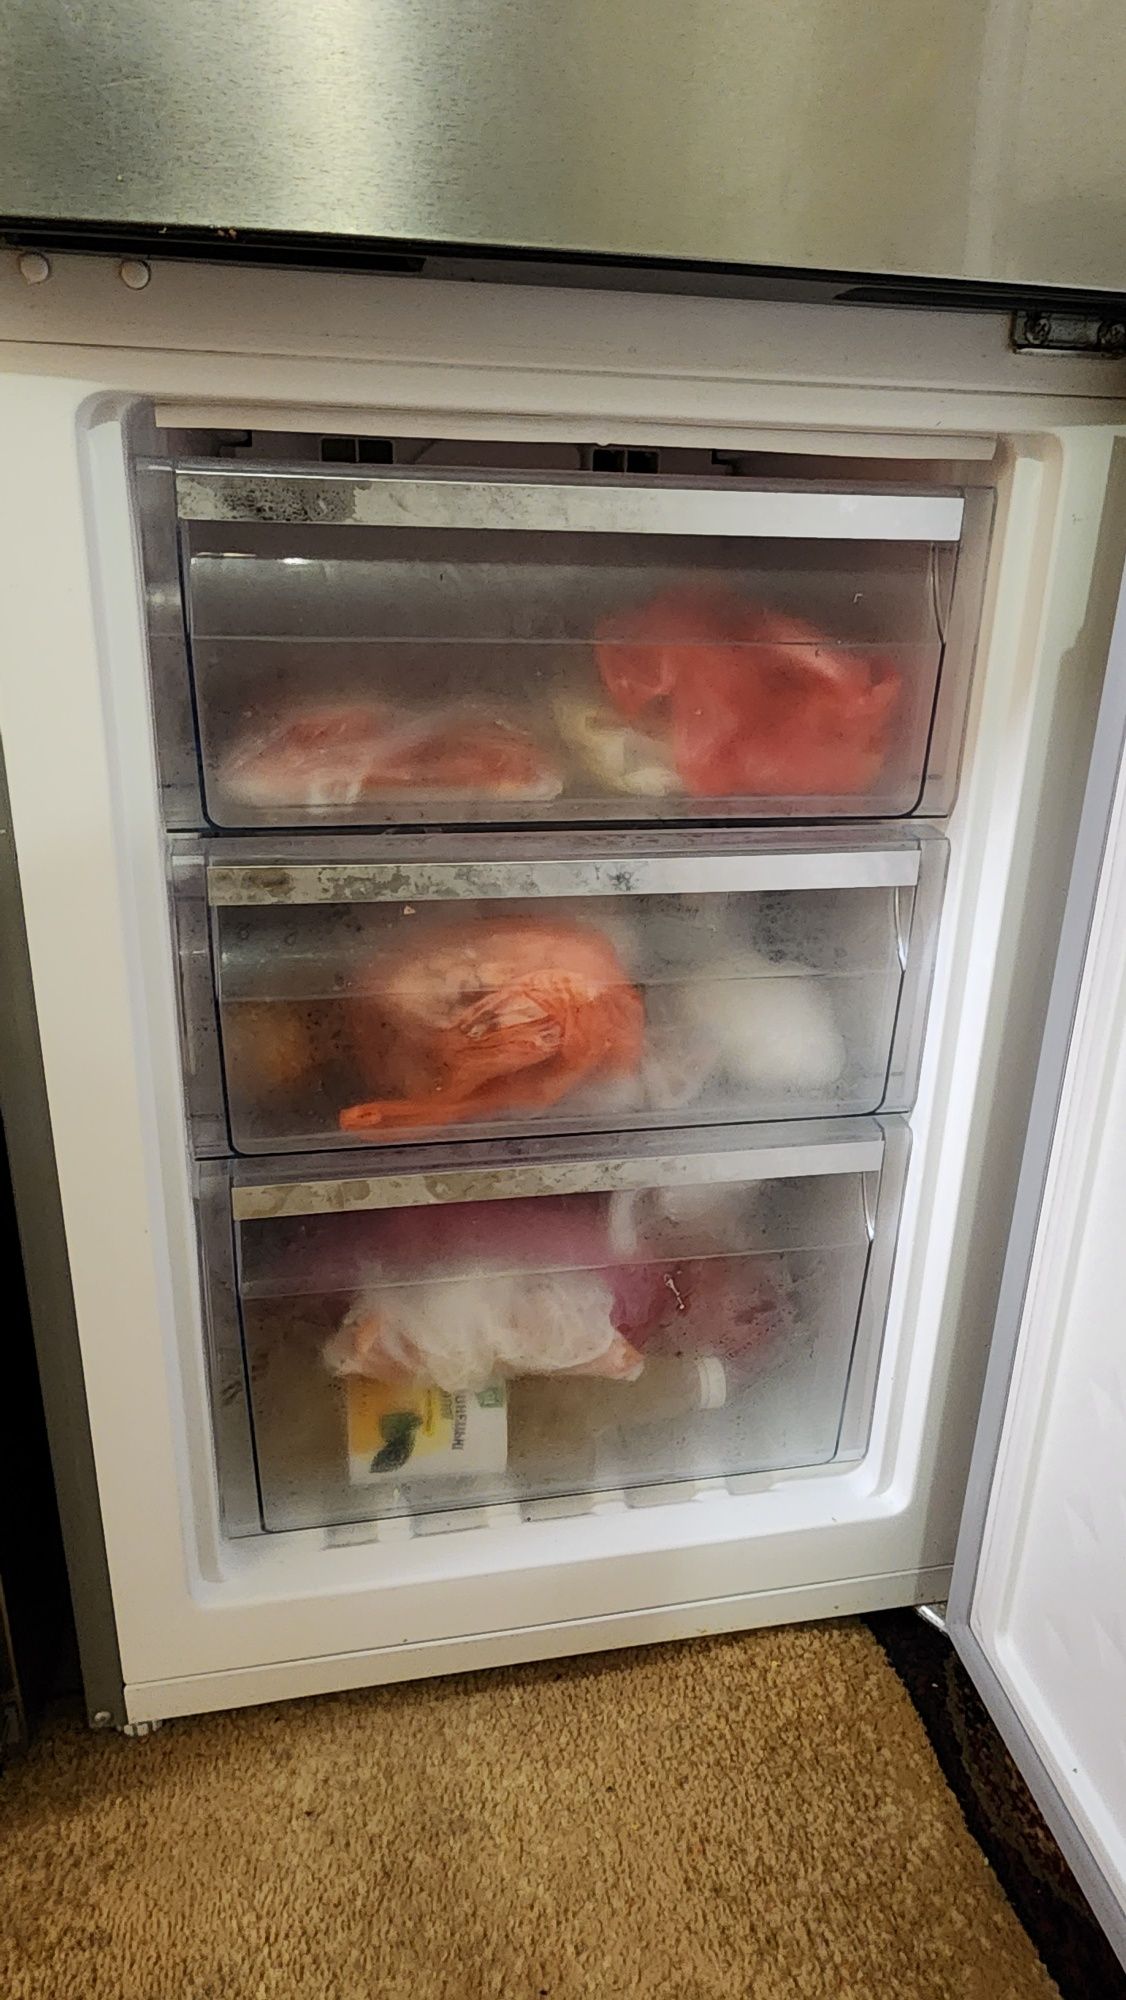 Холодильник Amica